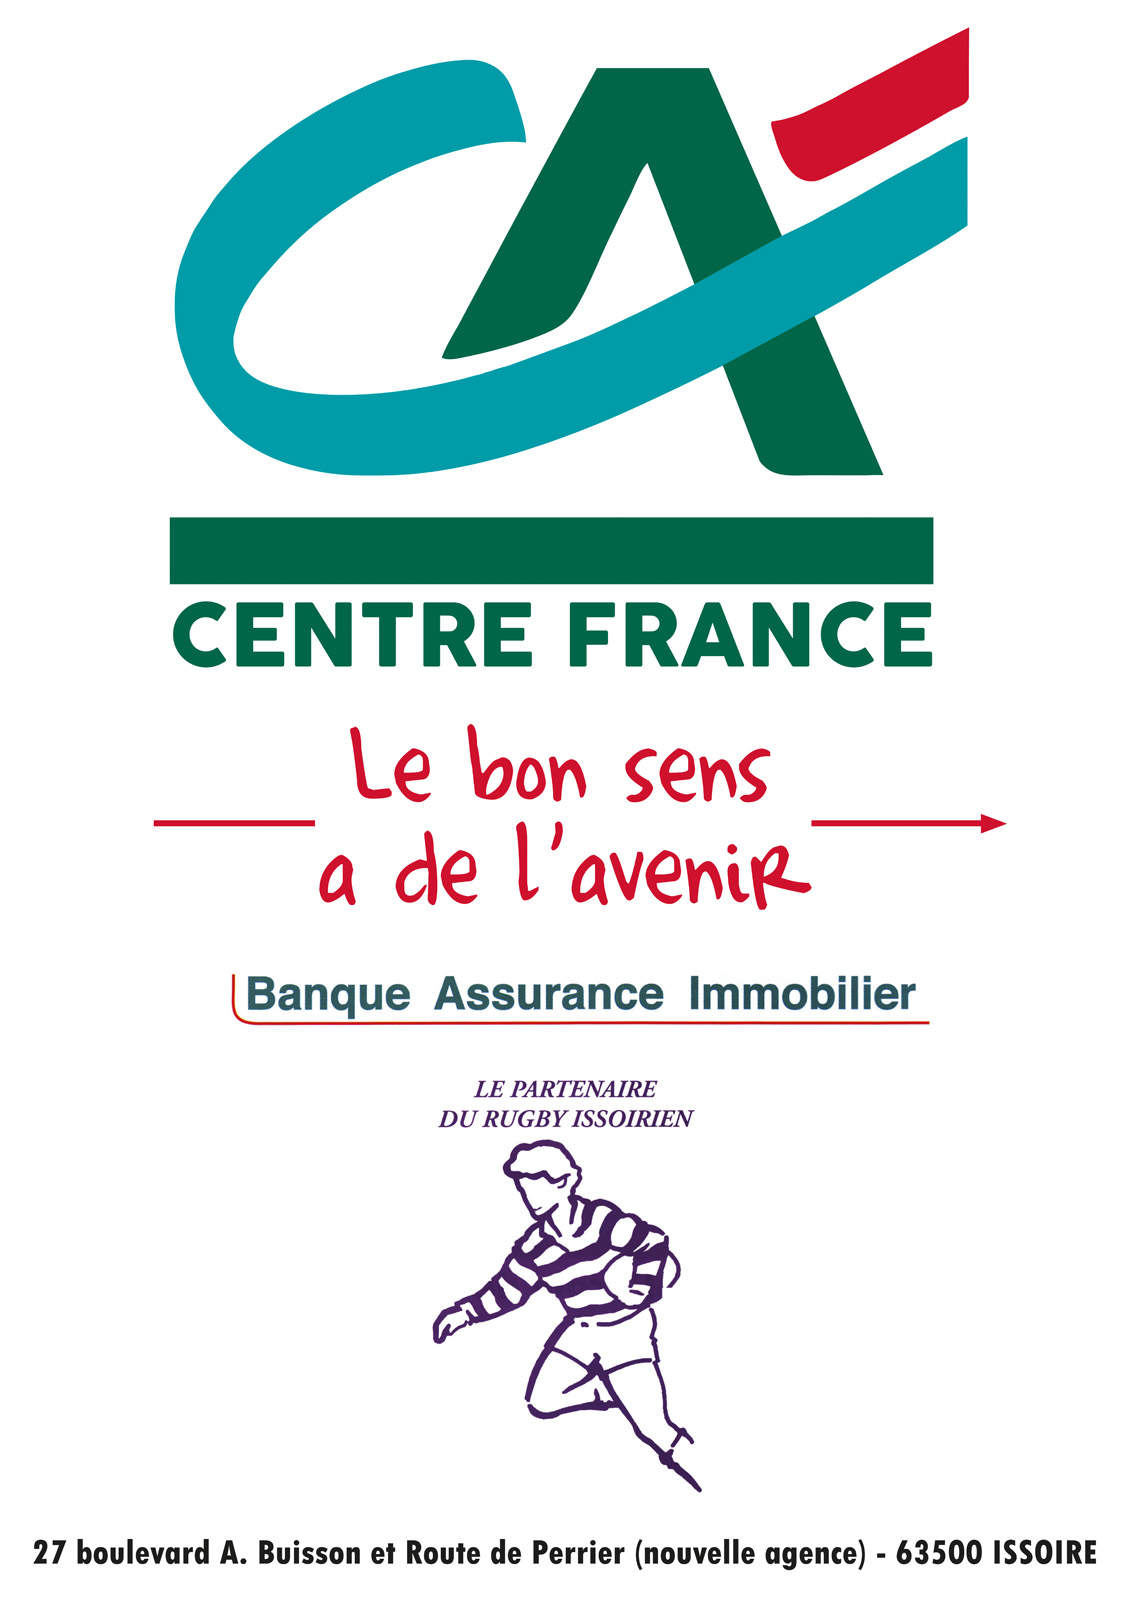 logo CREDIT AGRICOLE Centre France